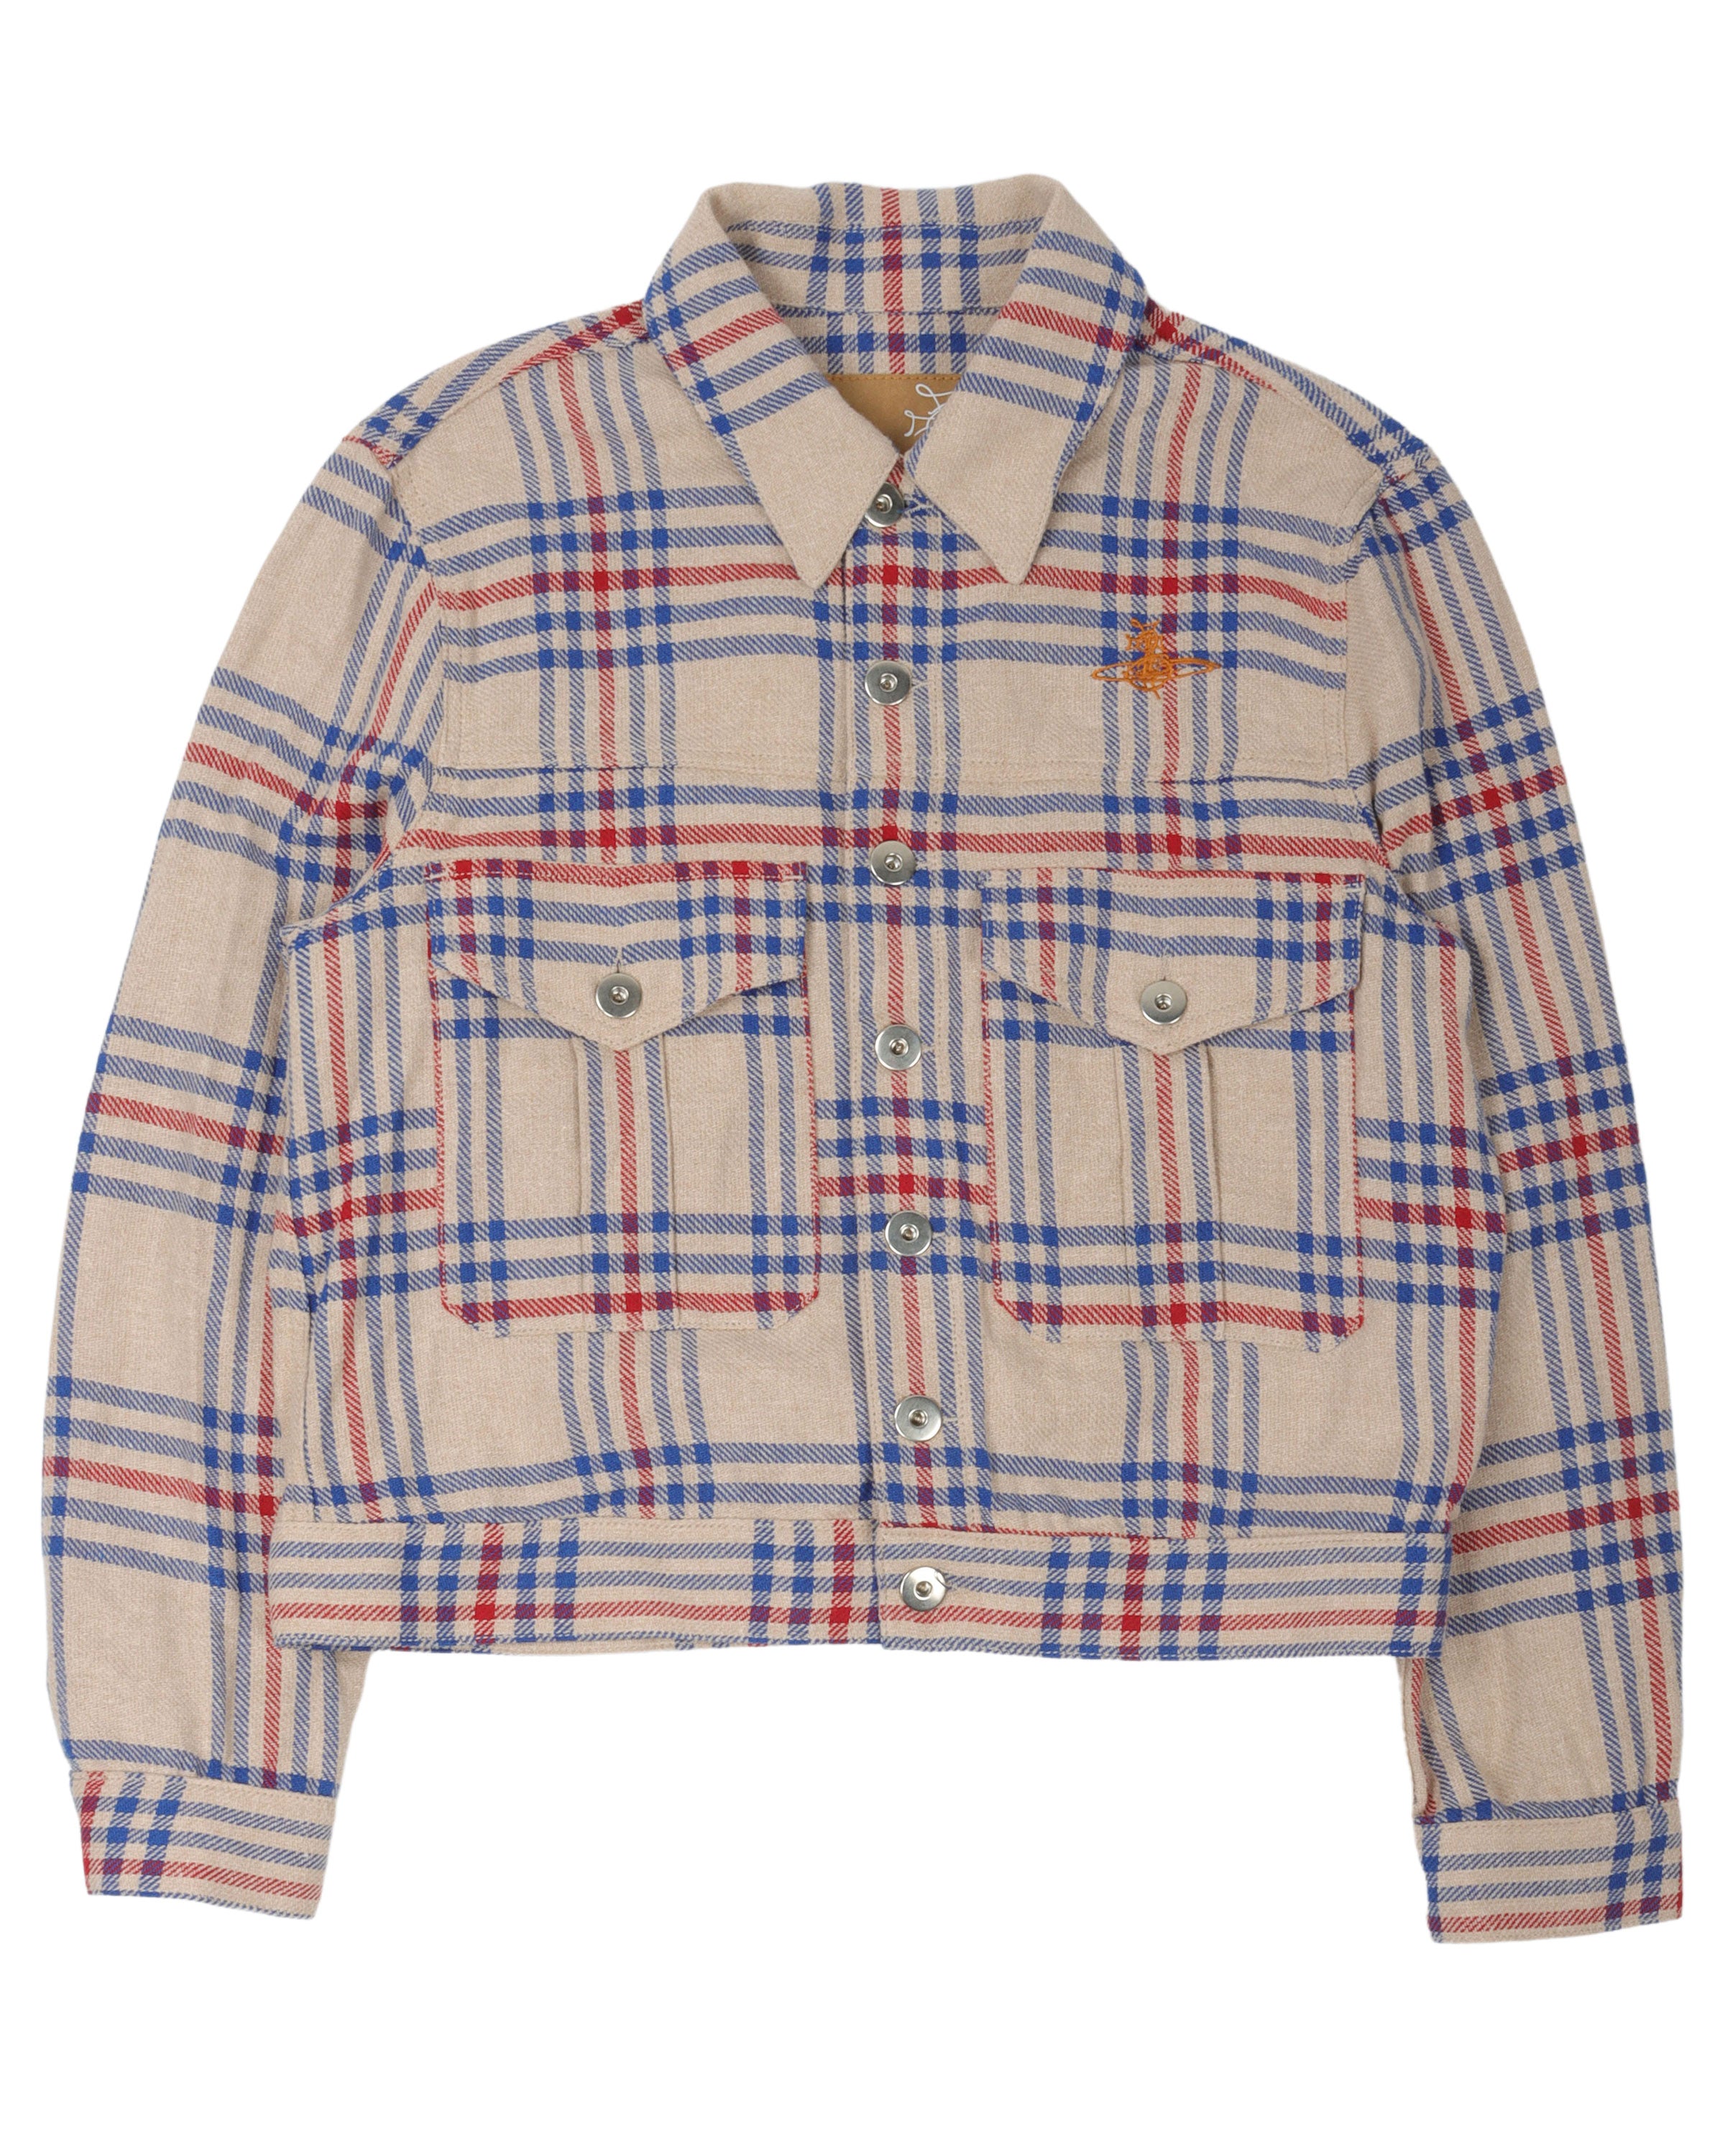 Vivienne Westwood Flannel Shirt